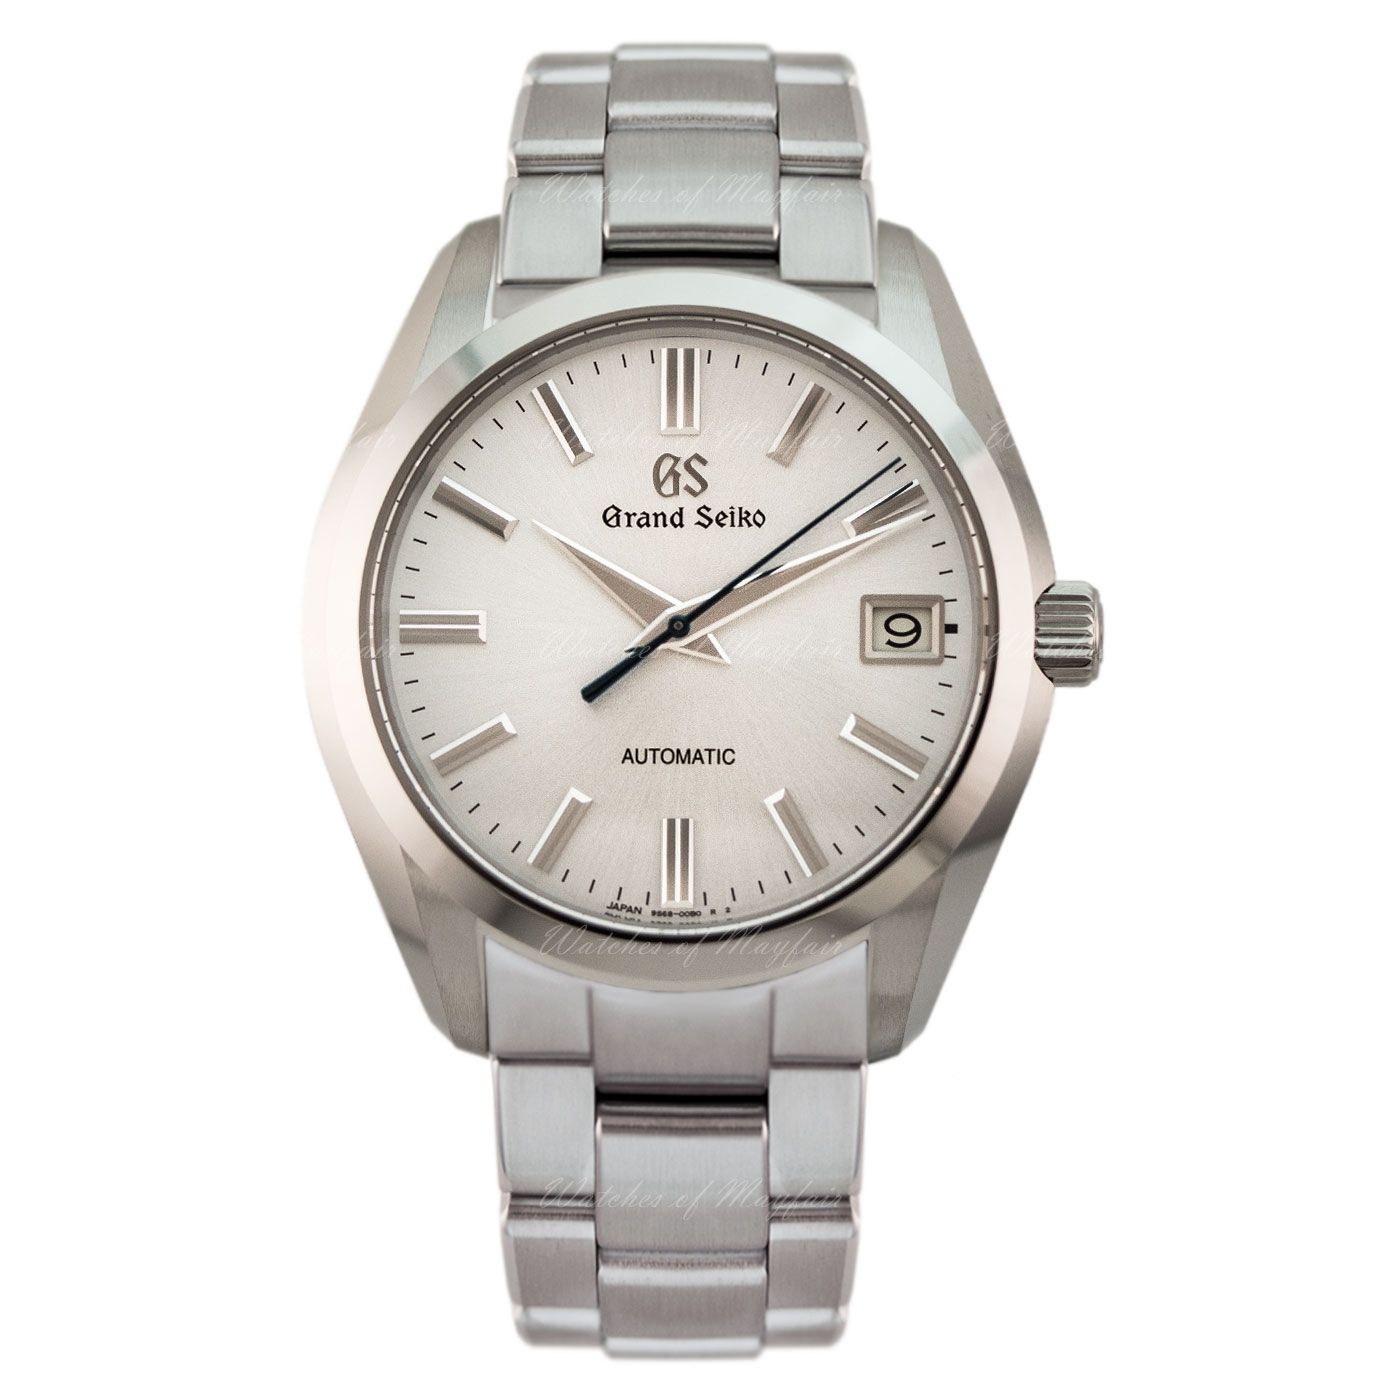 SBGR307 | Grand Seiko Heritage Automatique 42 mm watch. Buy Now